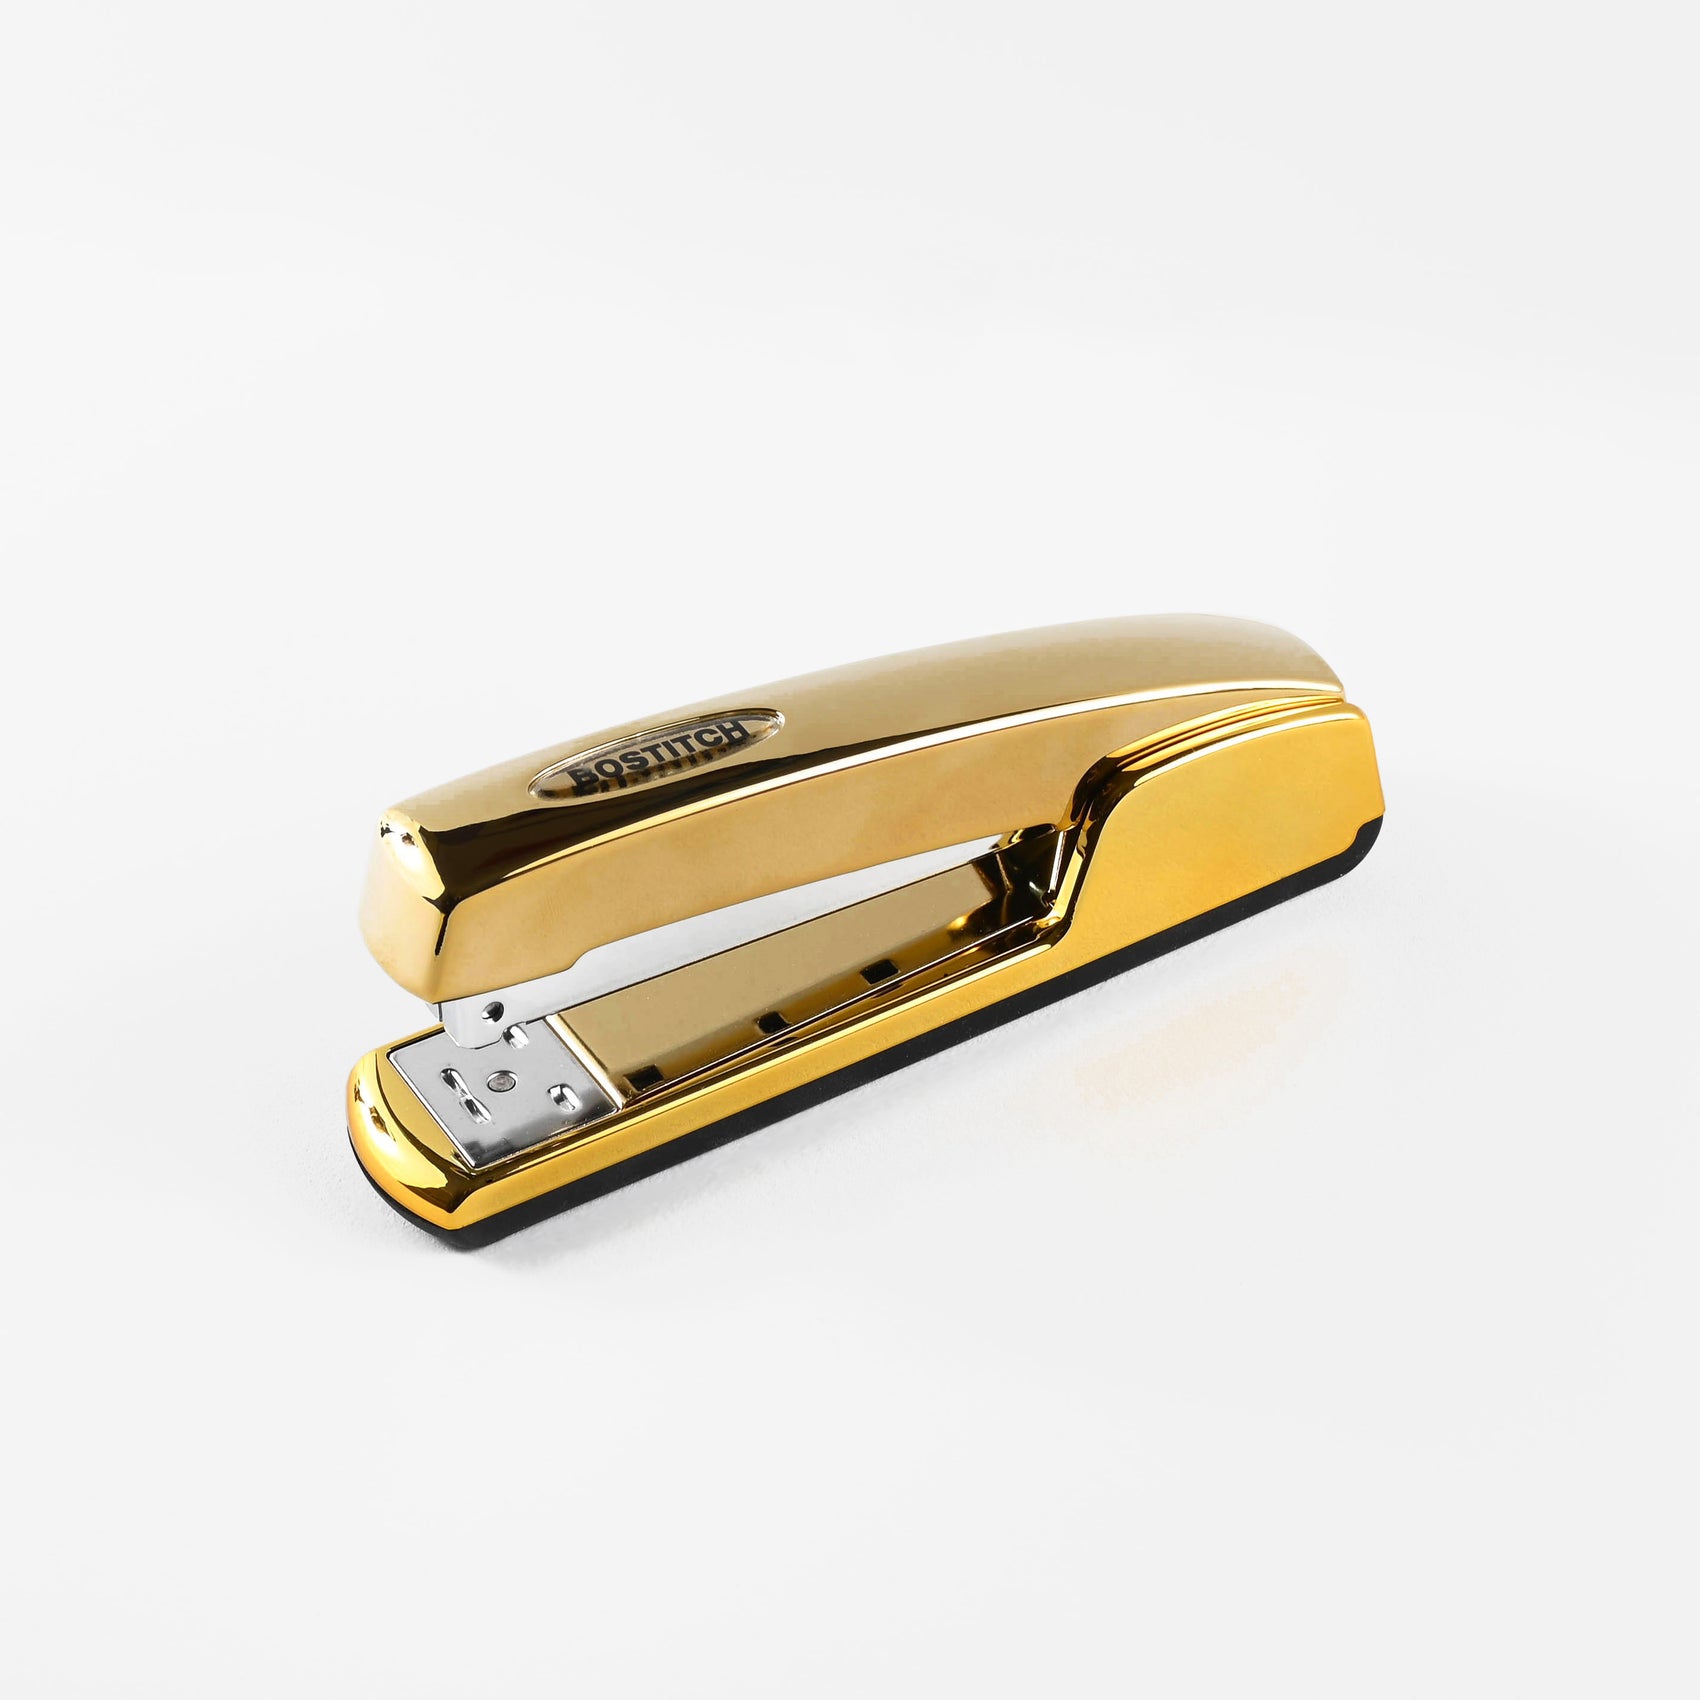 Bostitch Metallic Gold Stapler 